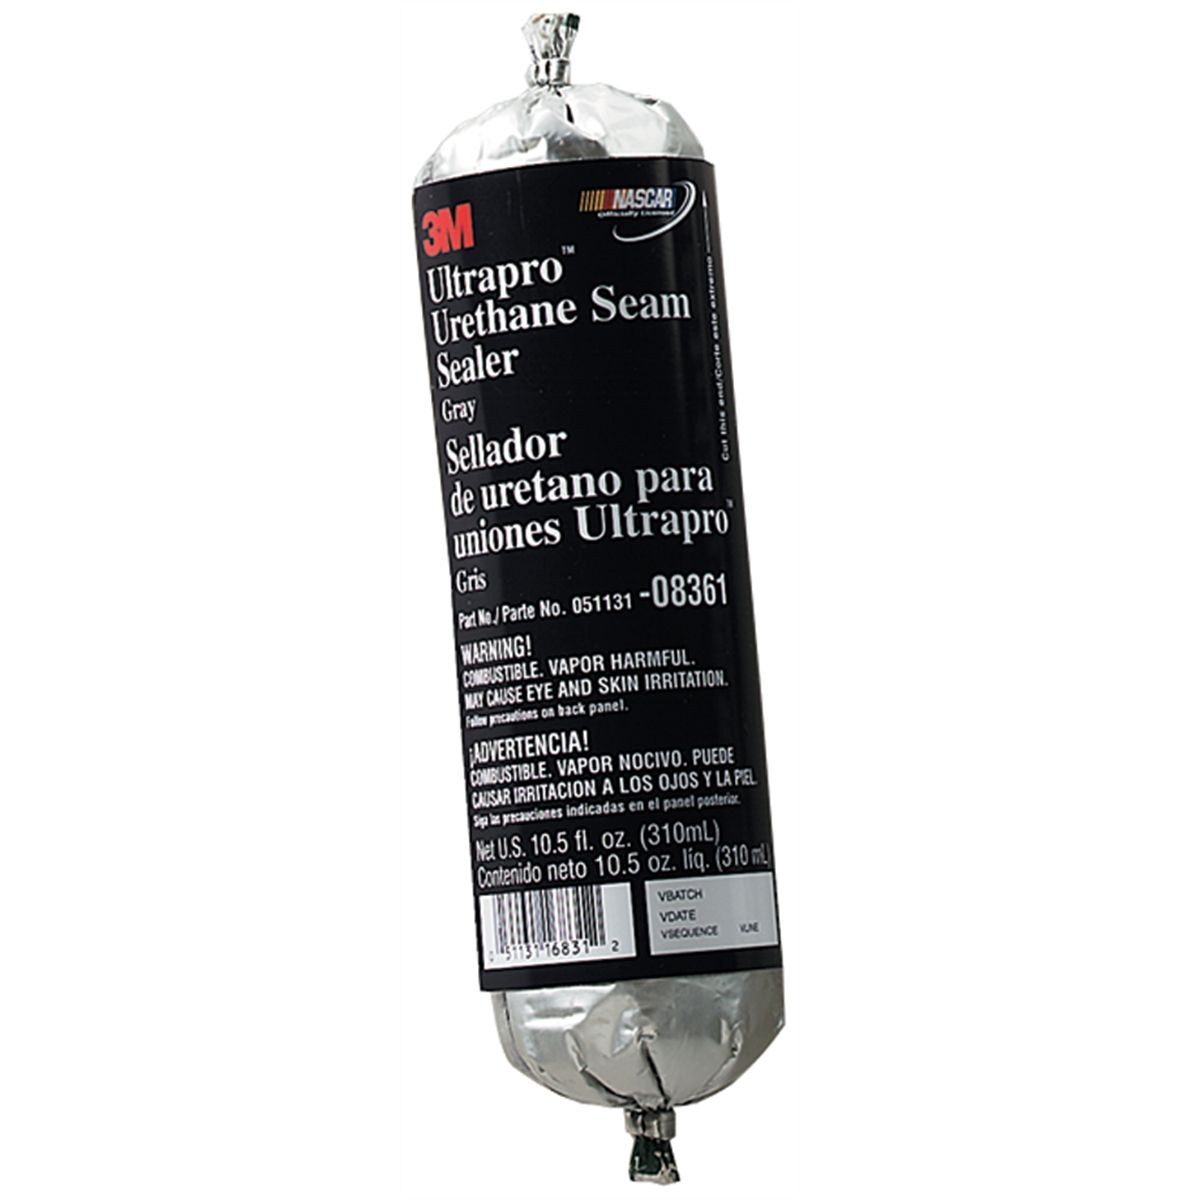 Ultrapro Urethane Seam Sealer, Gray